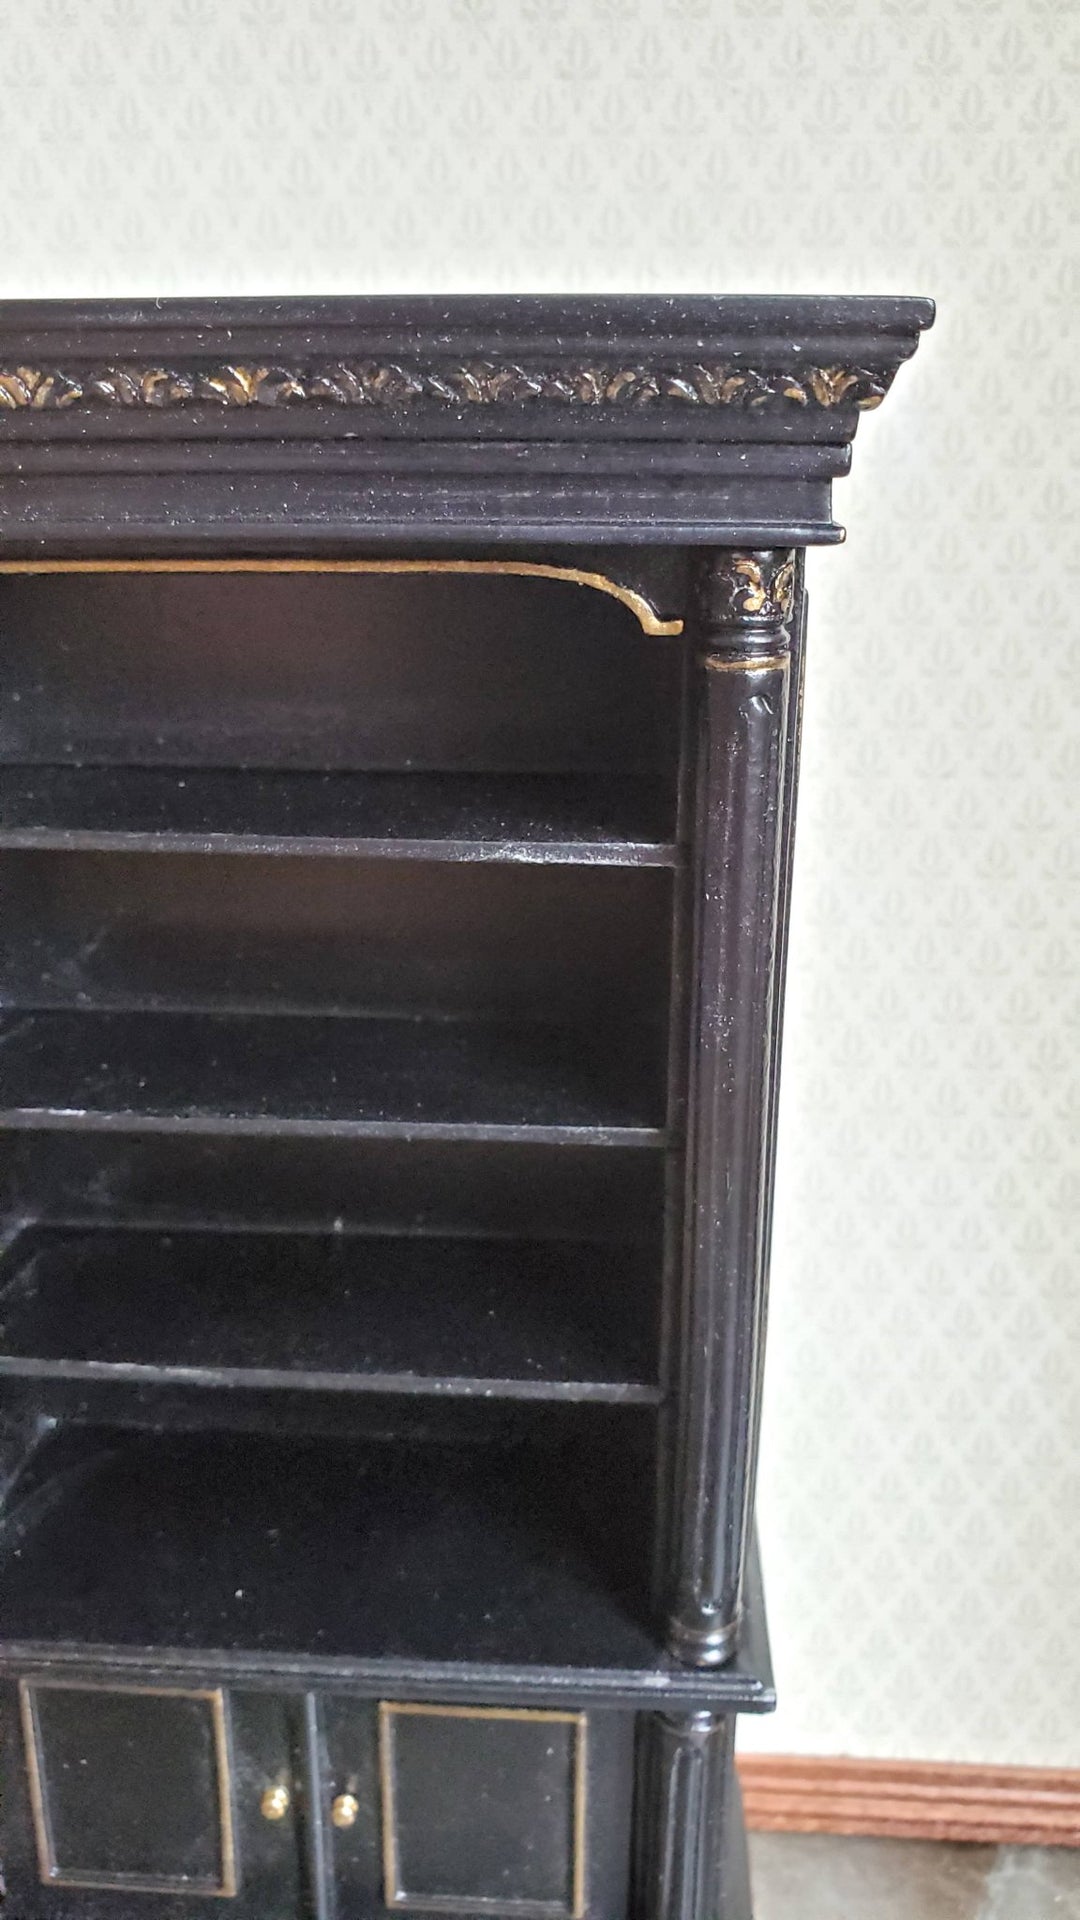 JBM Dollhouse Miniature Bookcase Black with Gold Accents 1:12 Scale Furniture - Miniature Crush